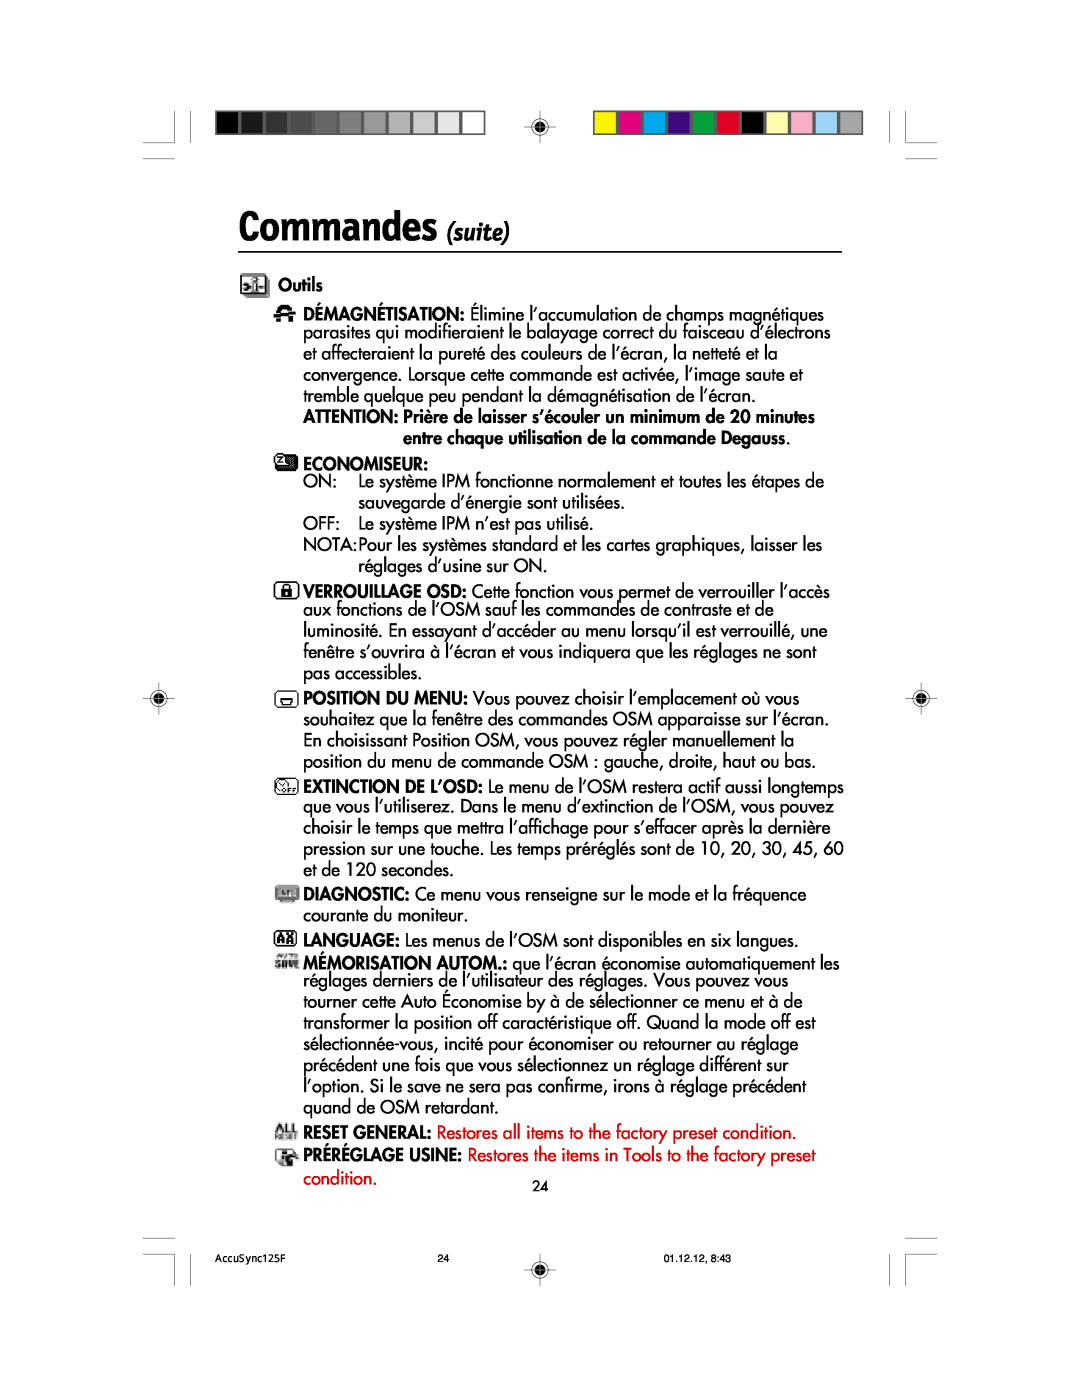 NEC 125F user manual Commandes suite, Outils 